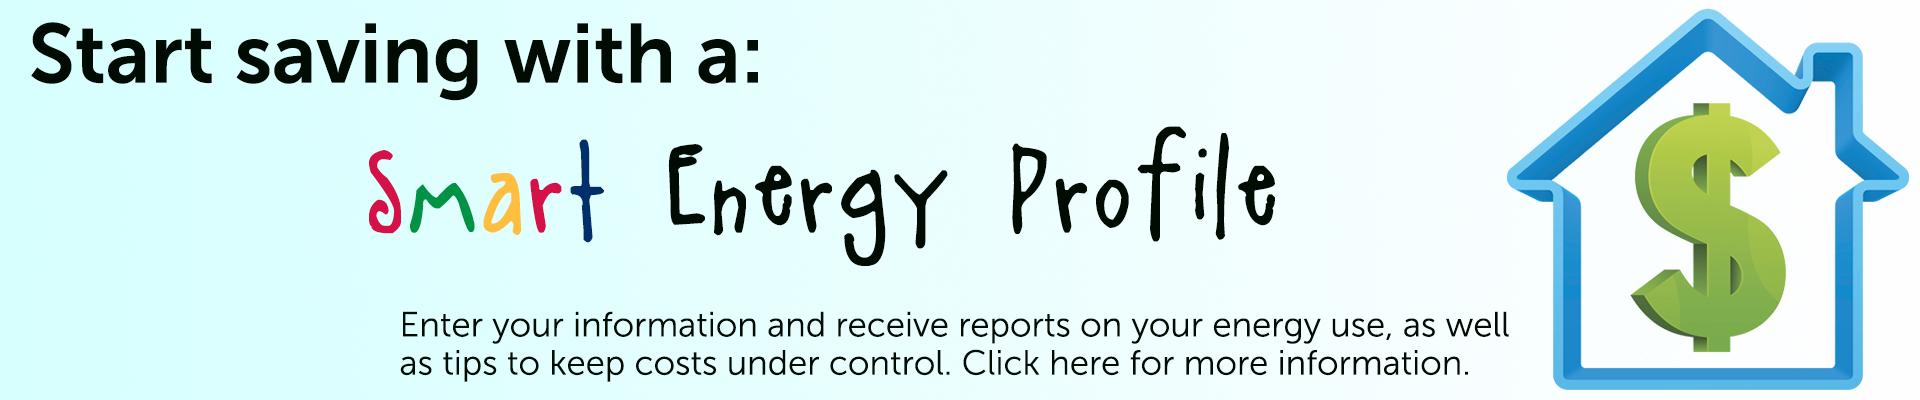 Smart Energy Profile Ad